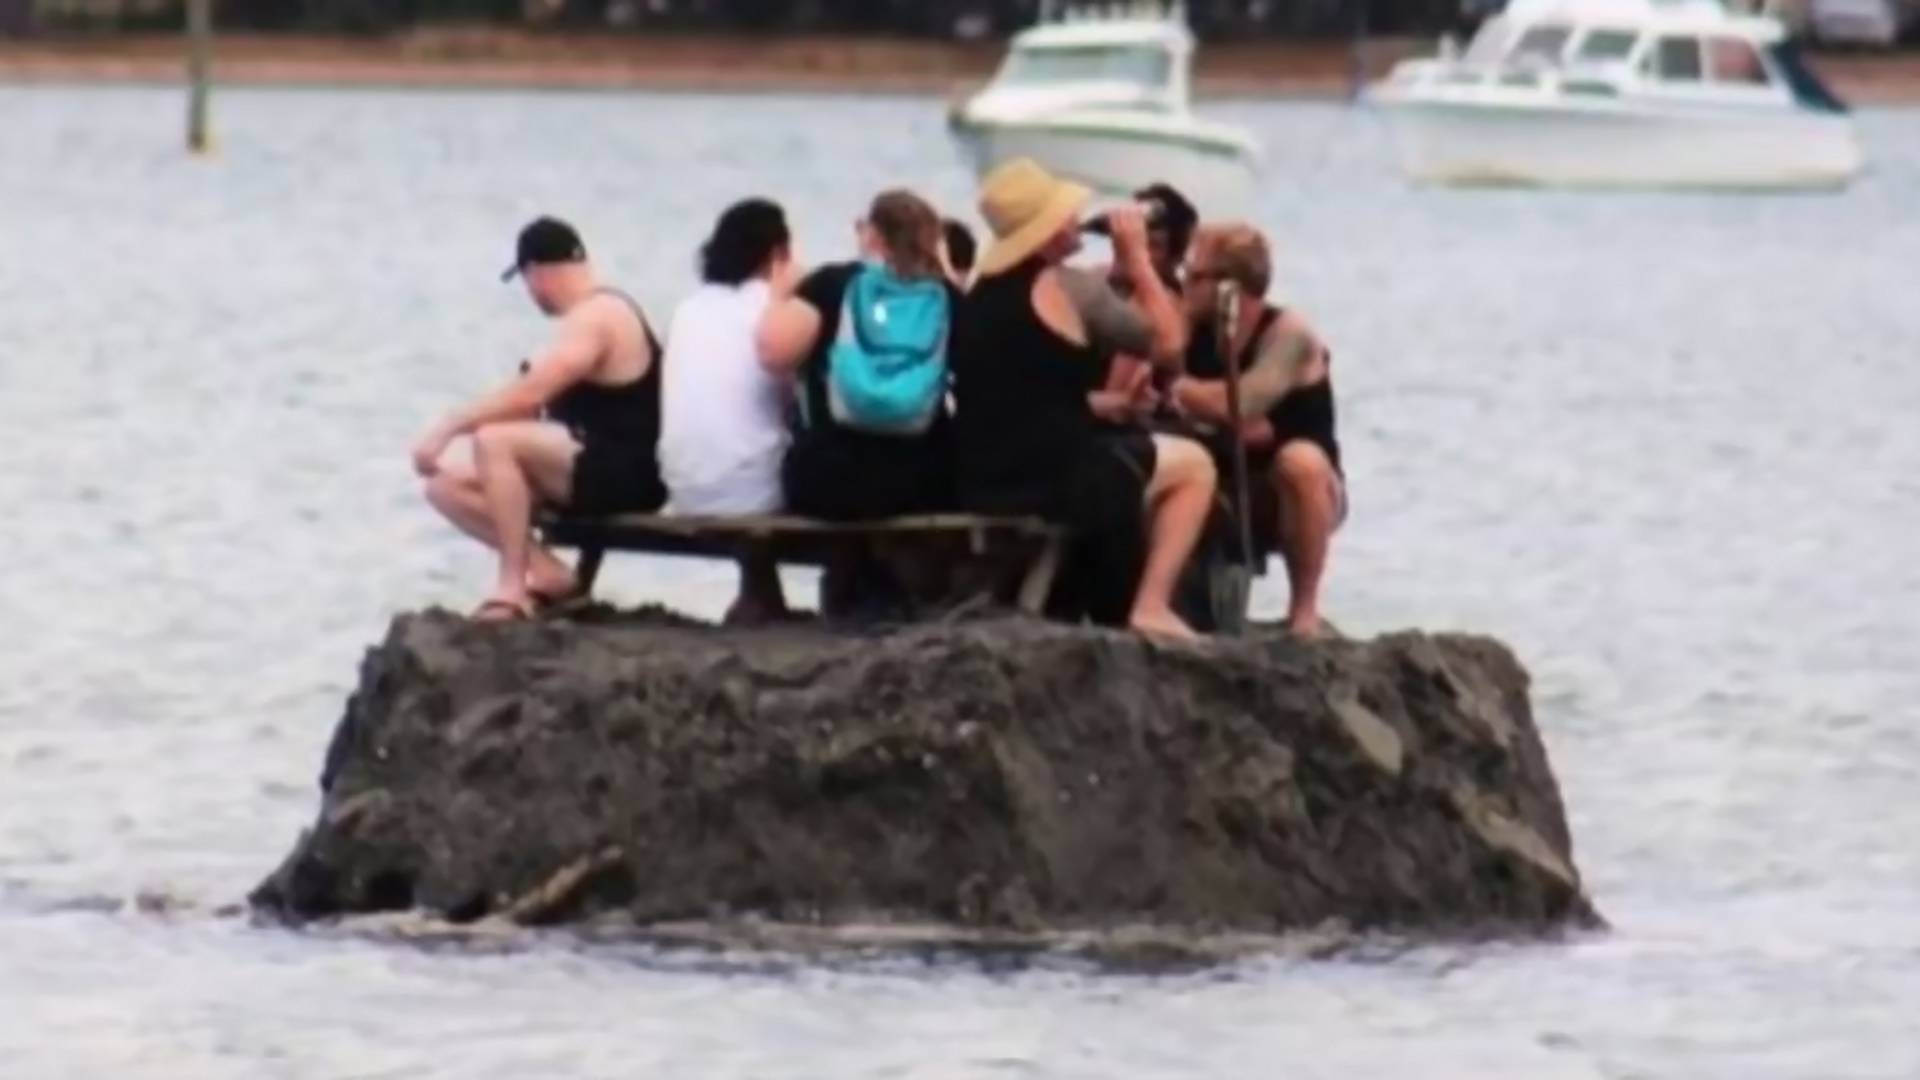 Novozelanđani napravili zasebno ostrvo da bi mogli da piju